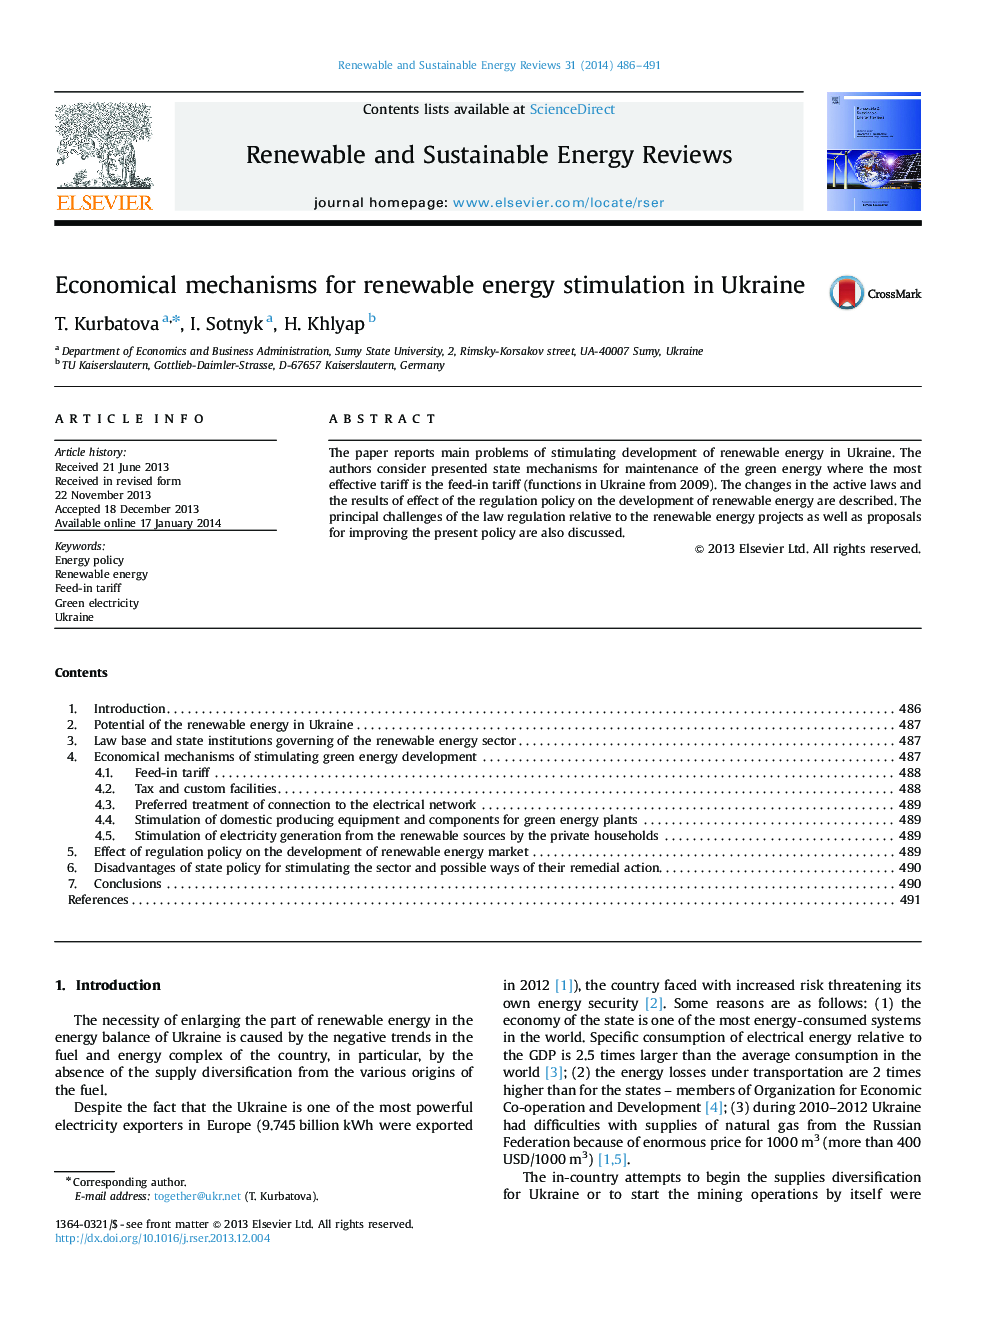 Economical mechanisms for renewable energy stimulation in Ukraine